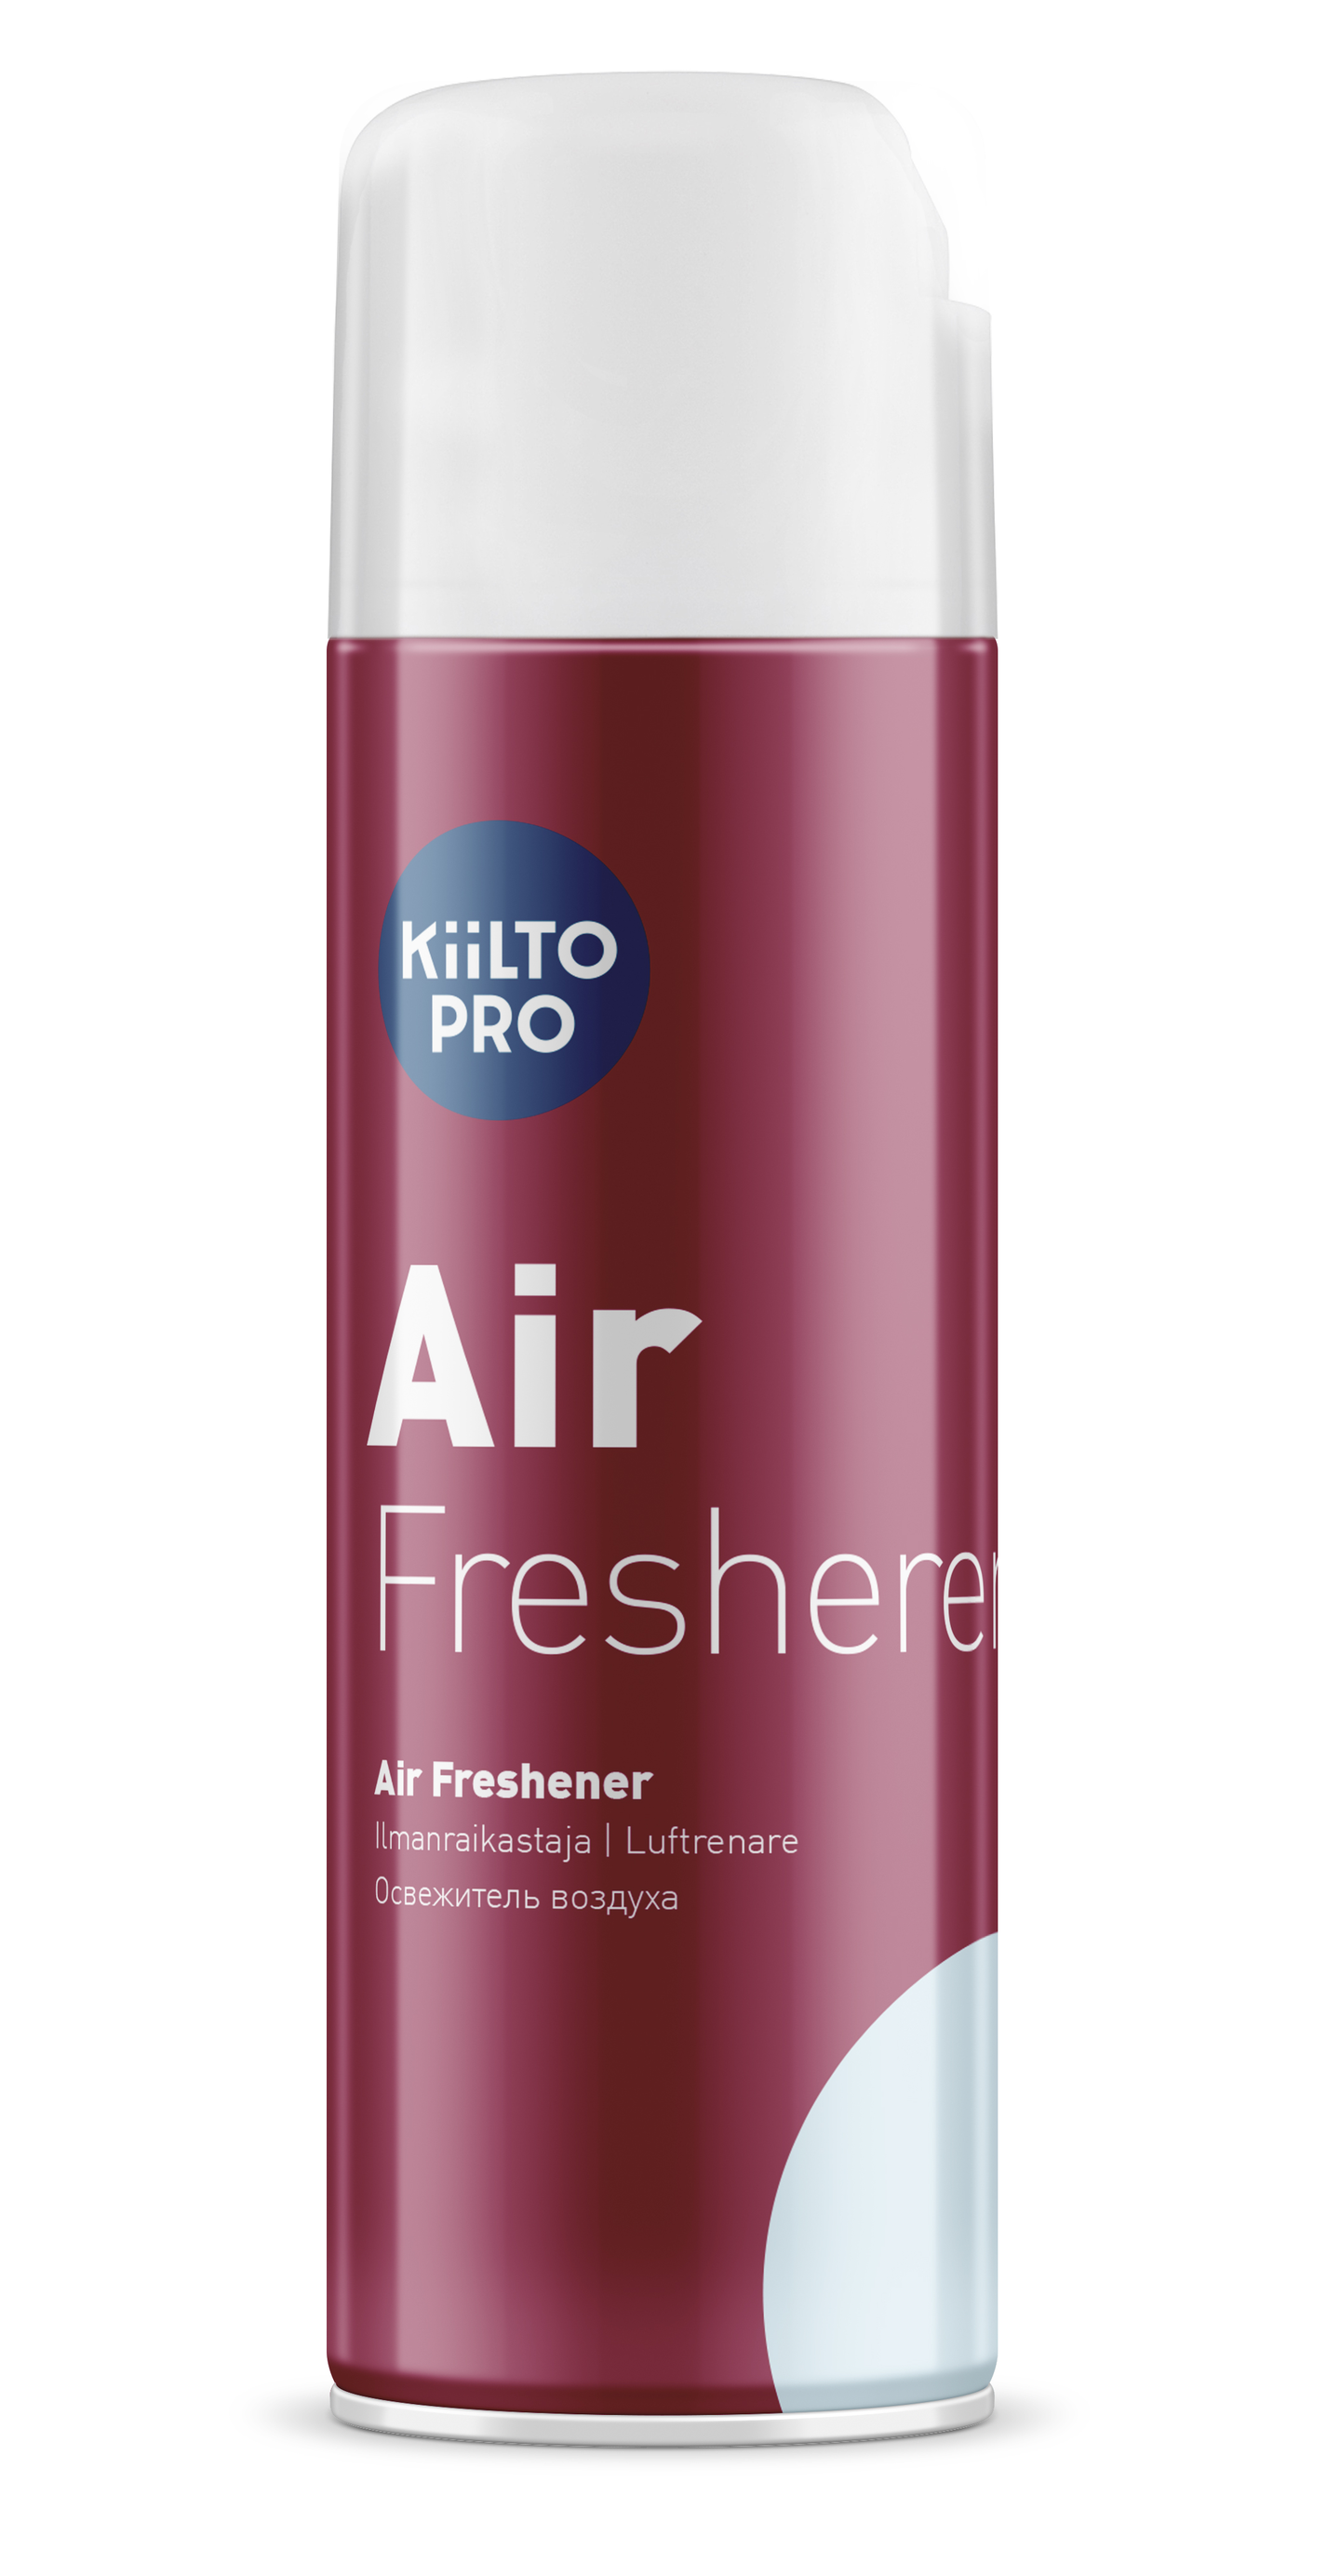 Kiilto Air Freshener 200ml ilmanraikastaja